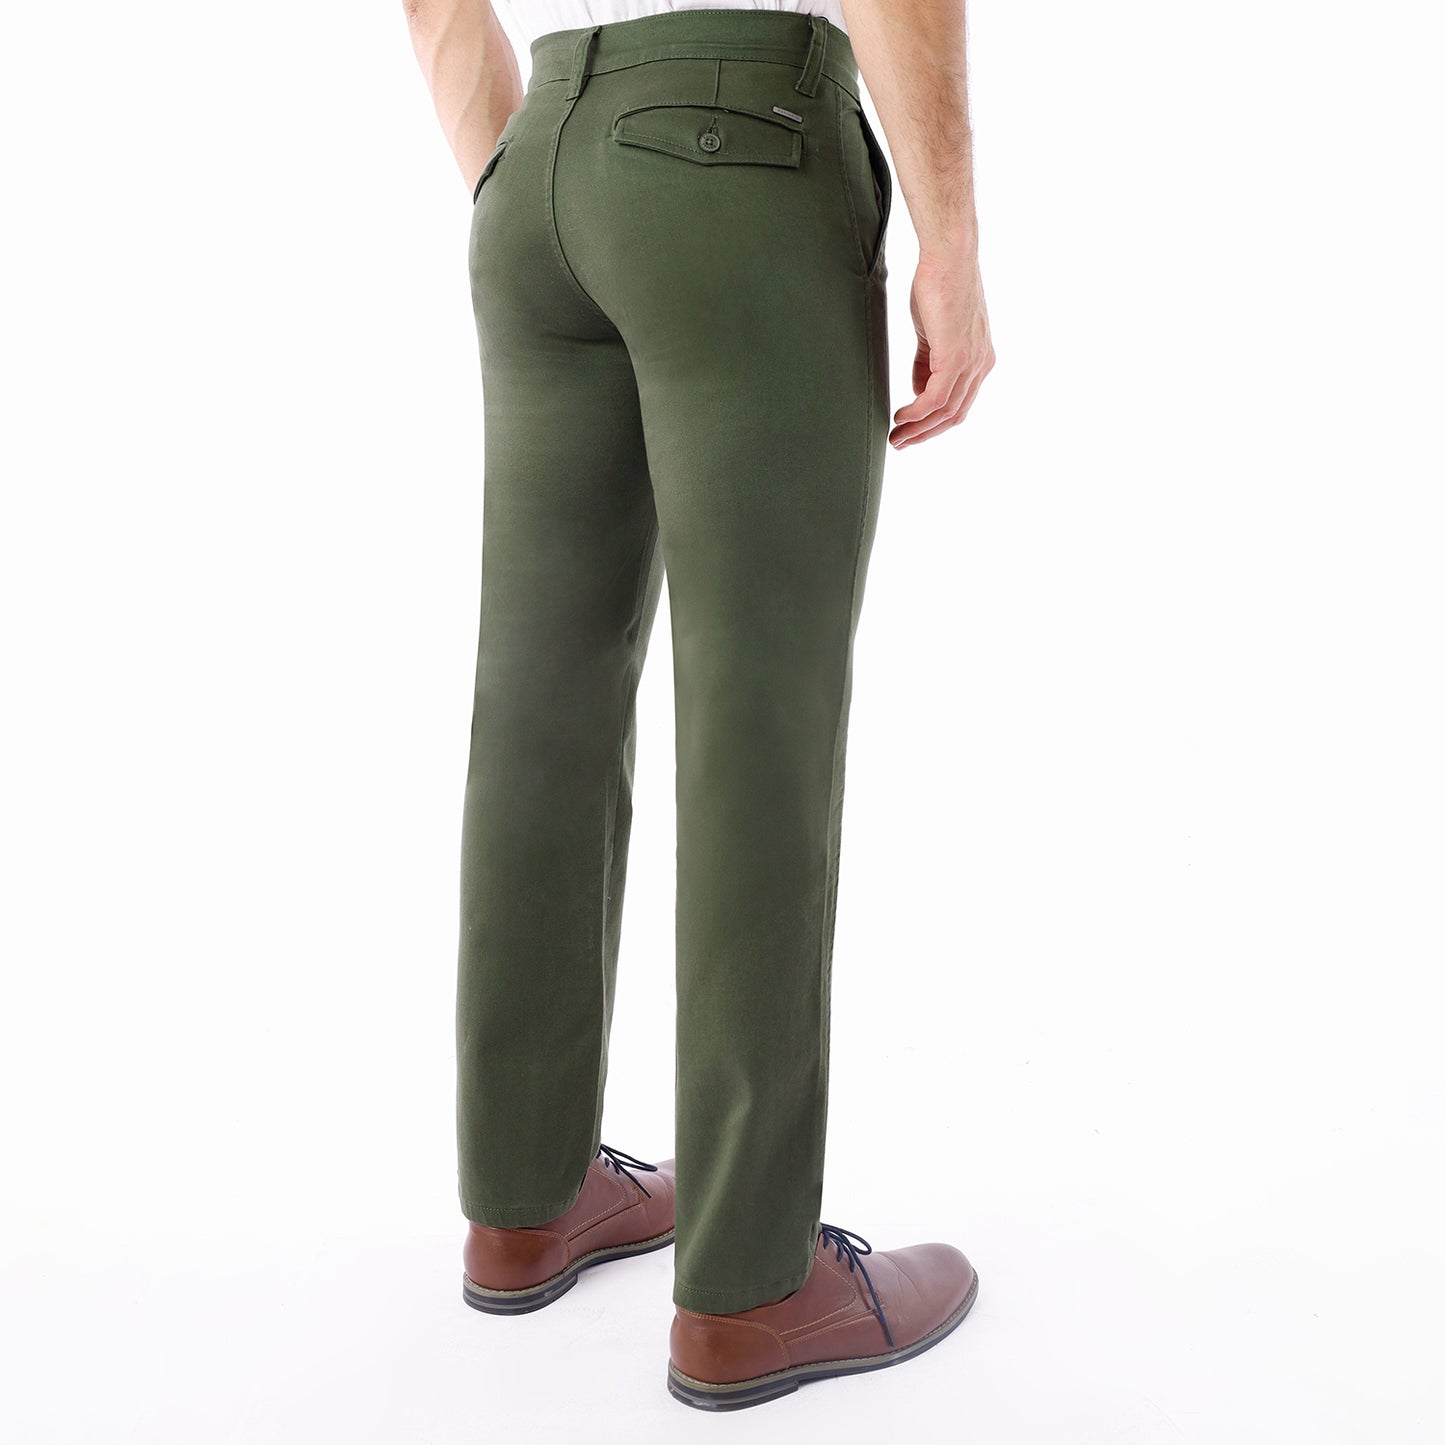 Pantalon Drill Hombre Satinado Regular Fit Verde Militar - 230616